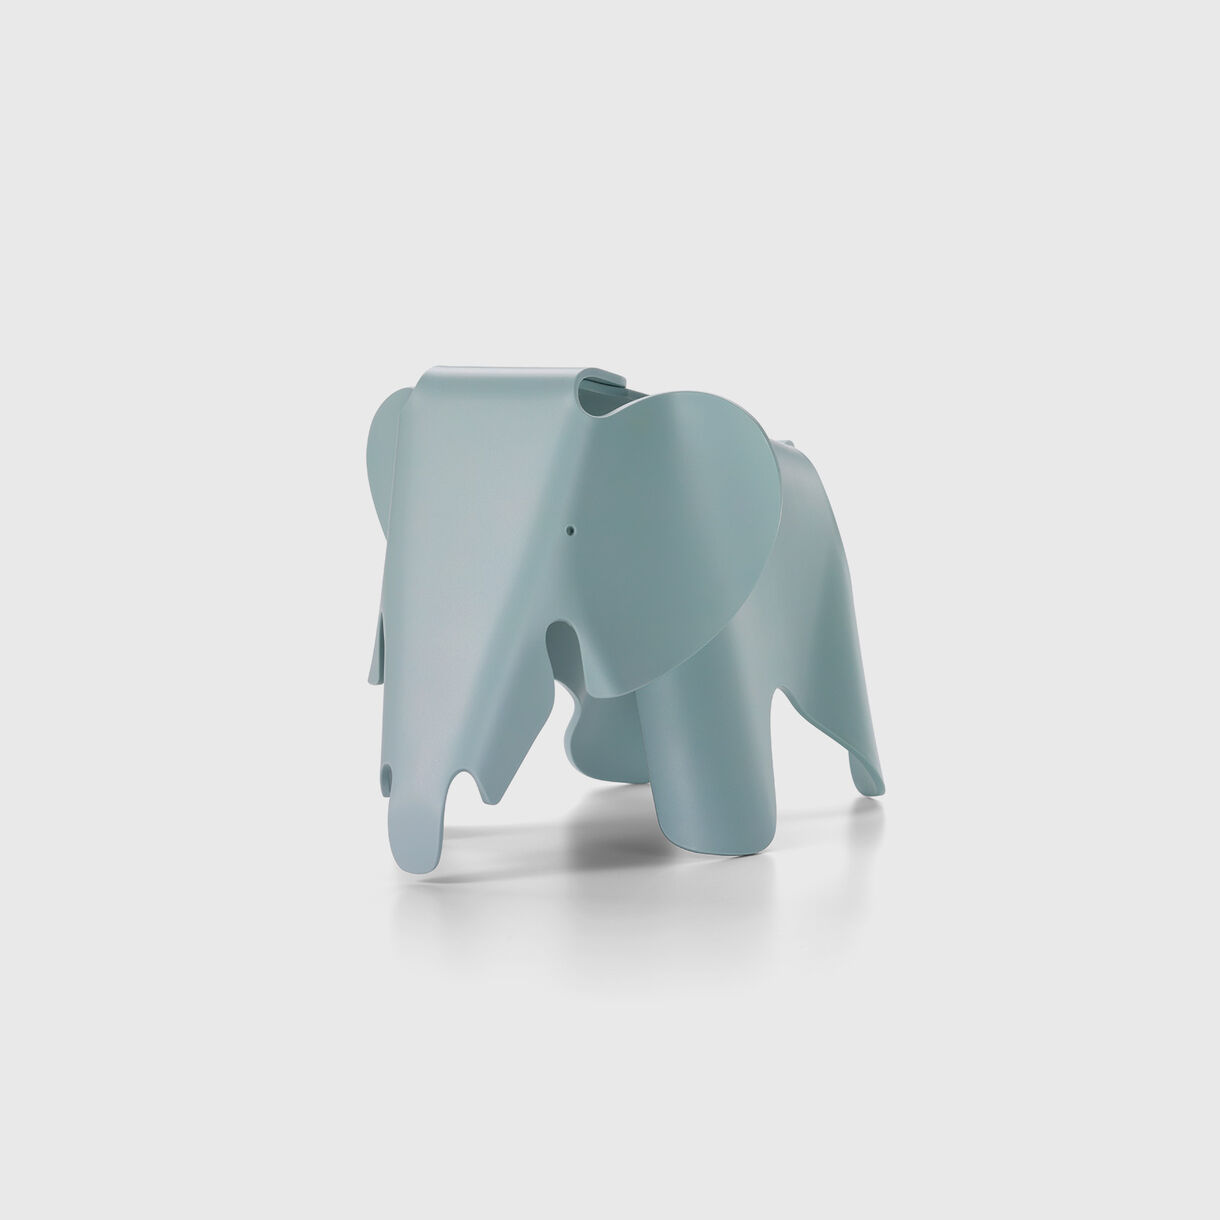 Eames Elephant Small, Ice Grey